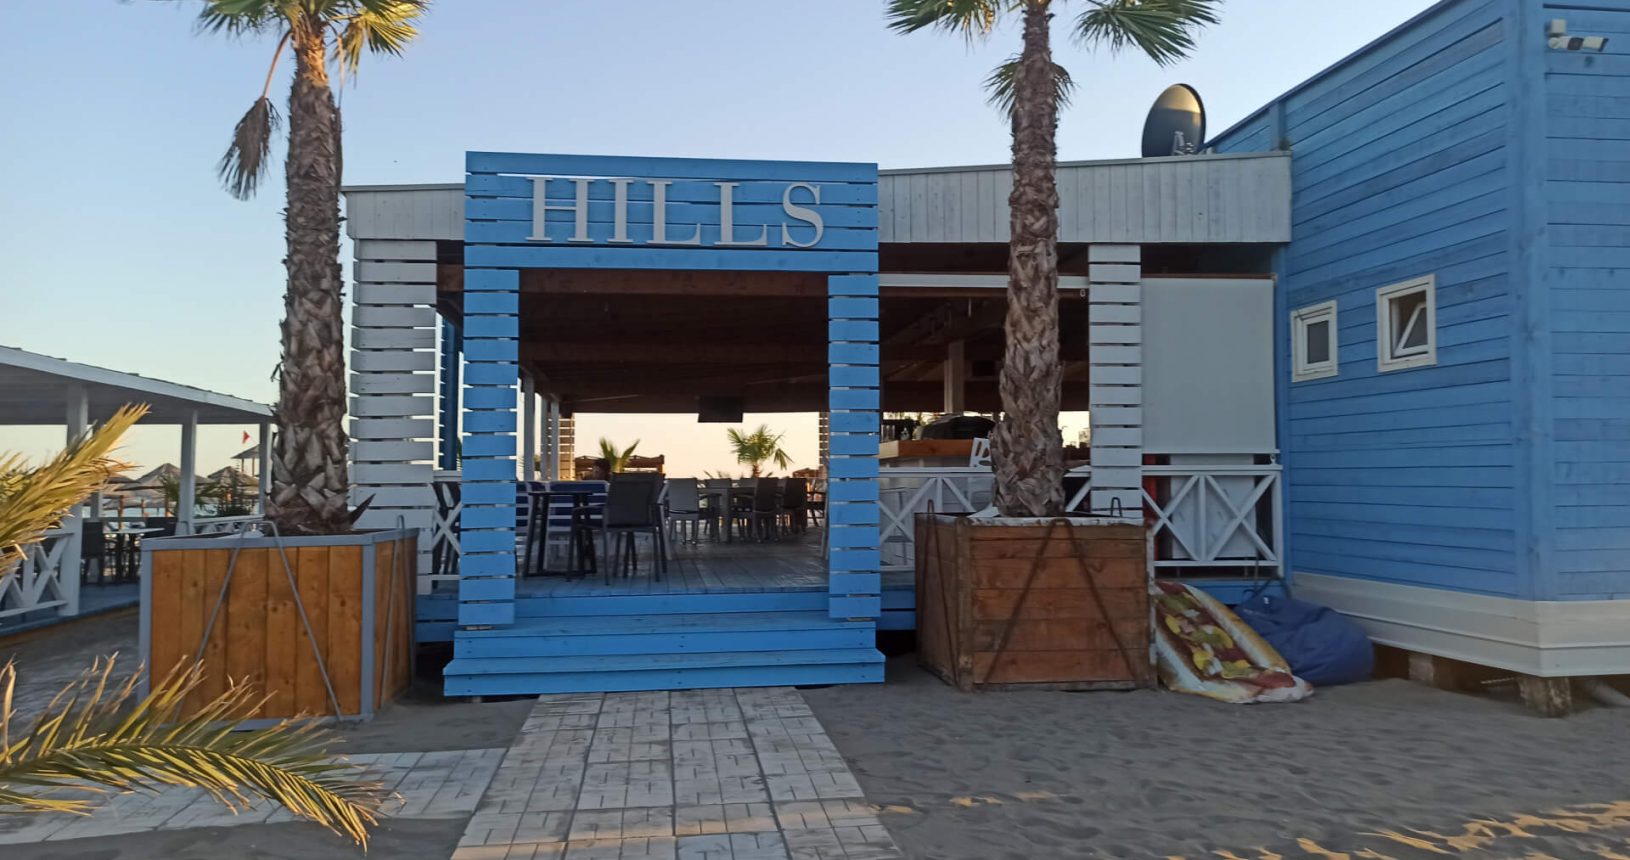 Hills Beach bar entrance